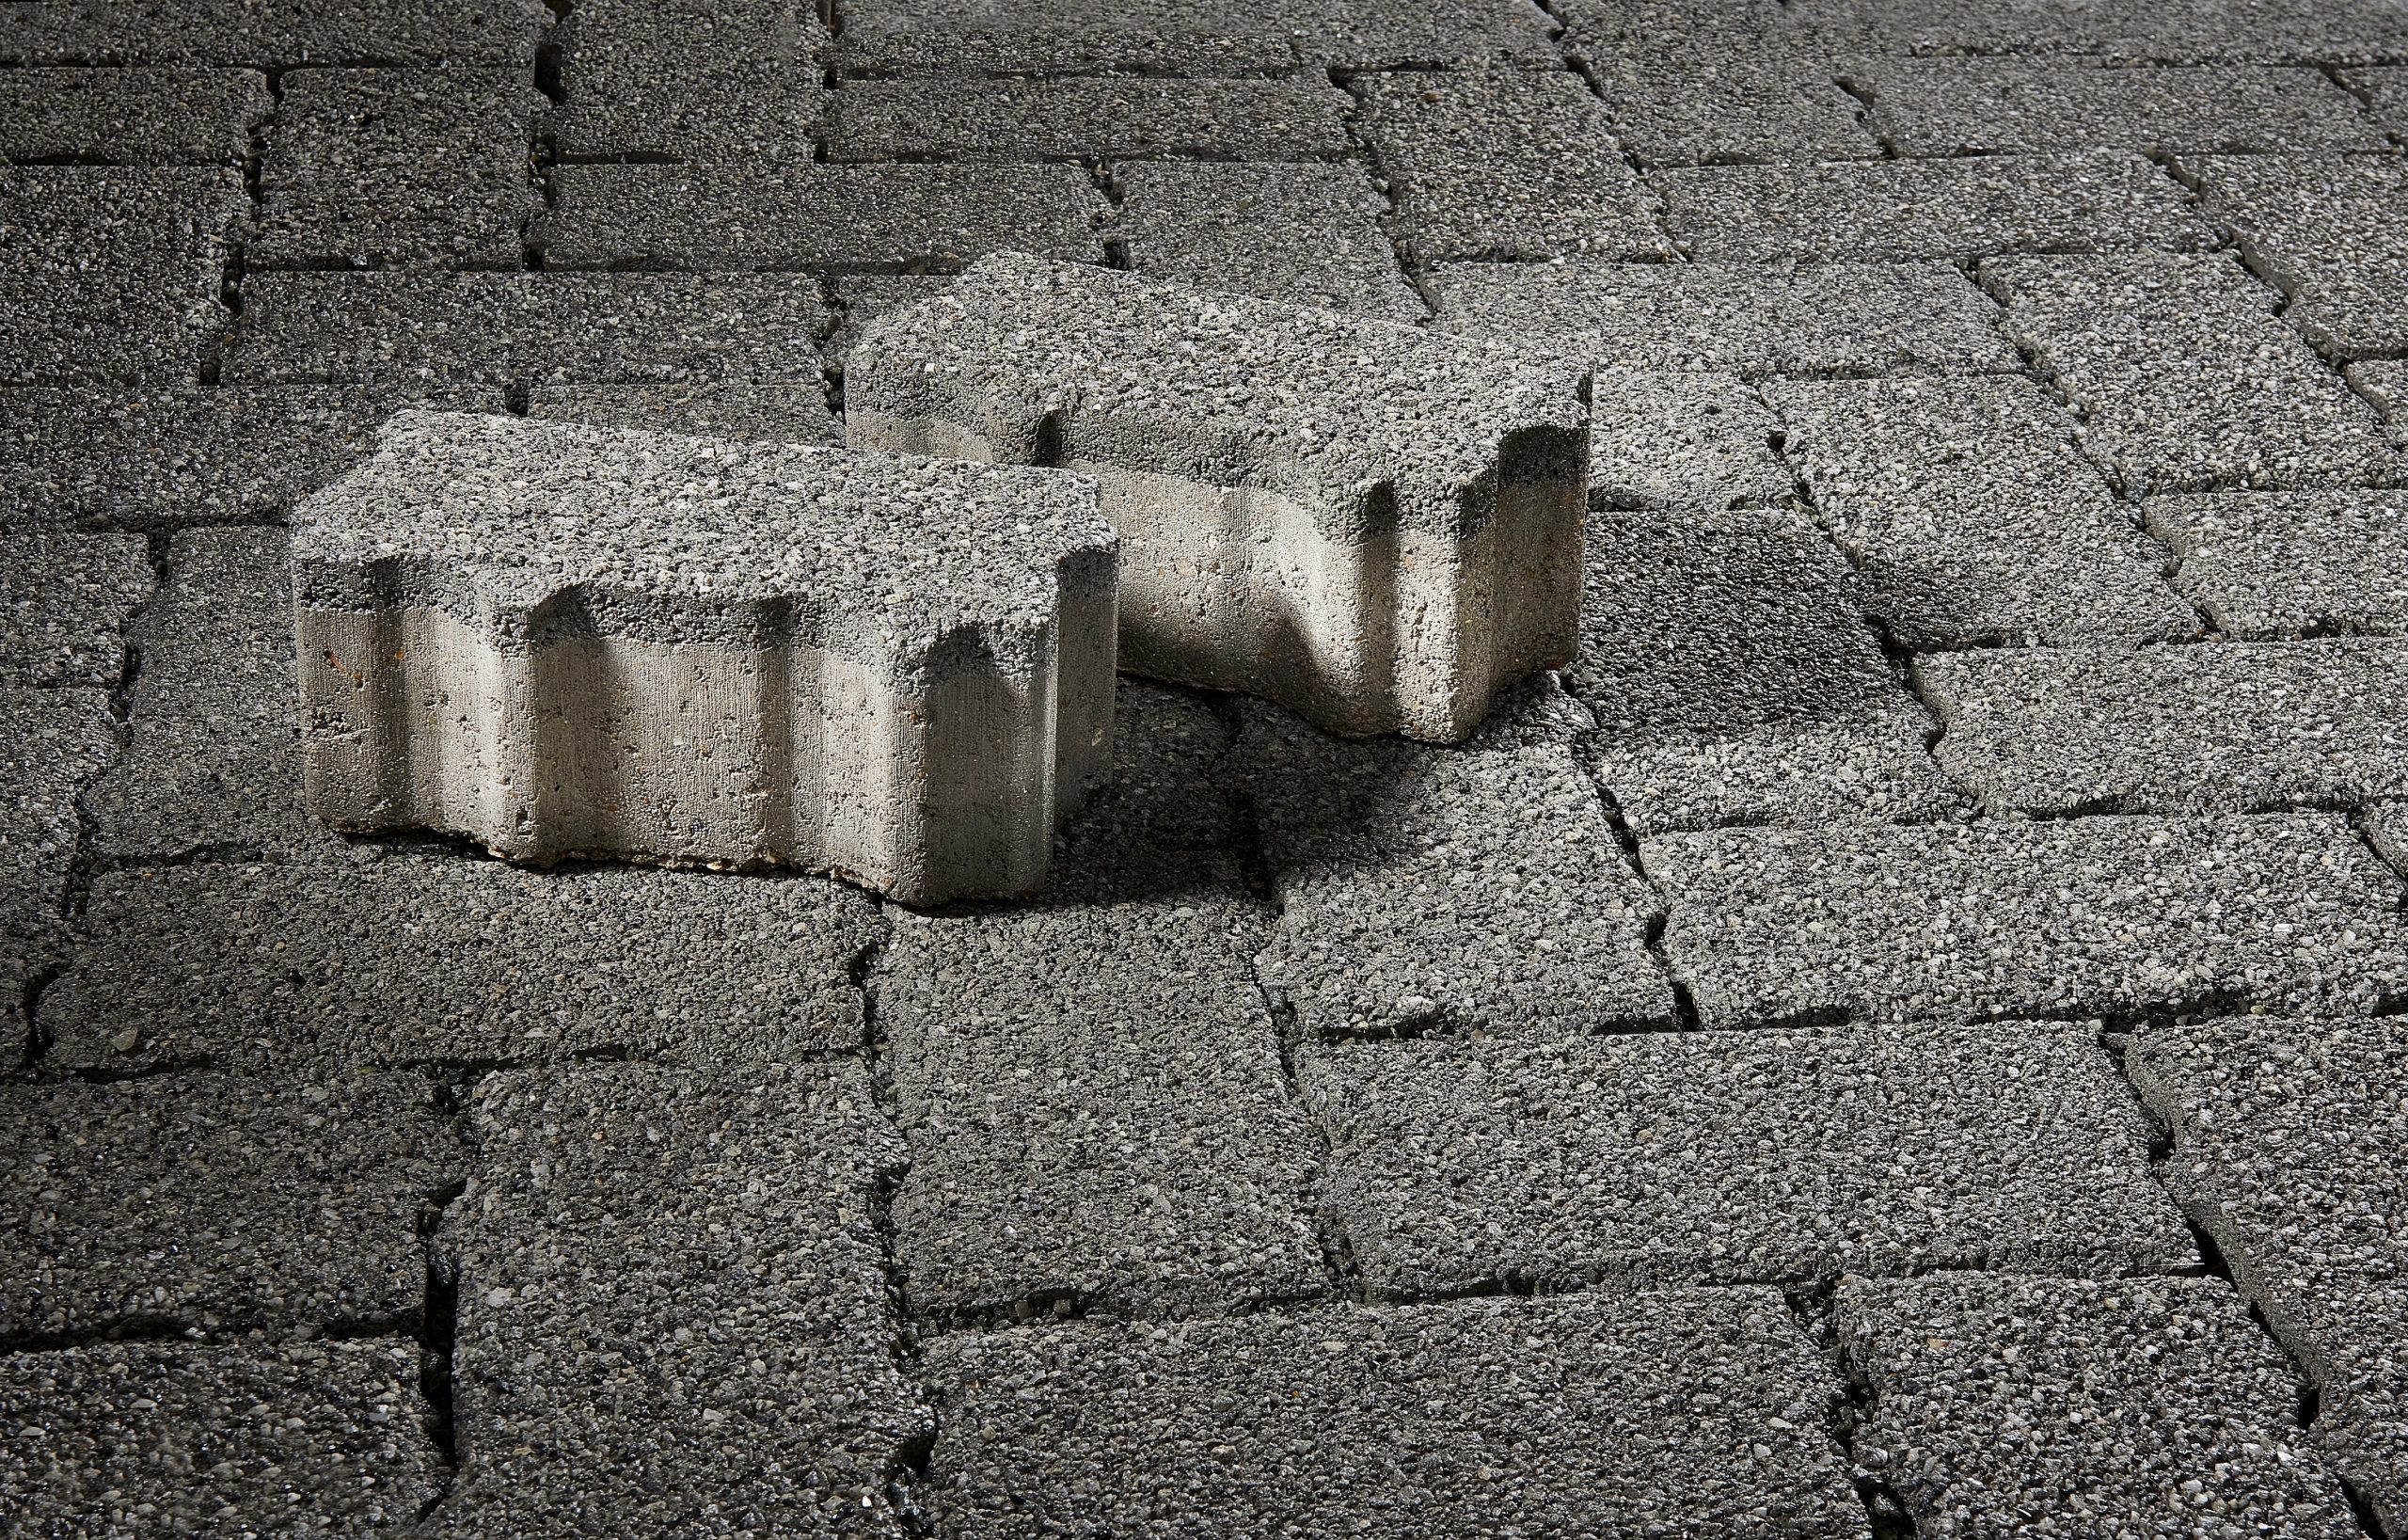 permeable block paving | permeable paving | black block paving |granite pavers | granite block paving | is block paving permeable | what is permeable paving | brett permeable block paving | suds | drainage pavers | sustainable paving | eco friendly pavers